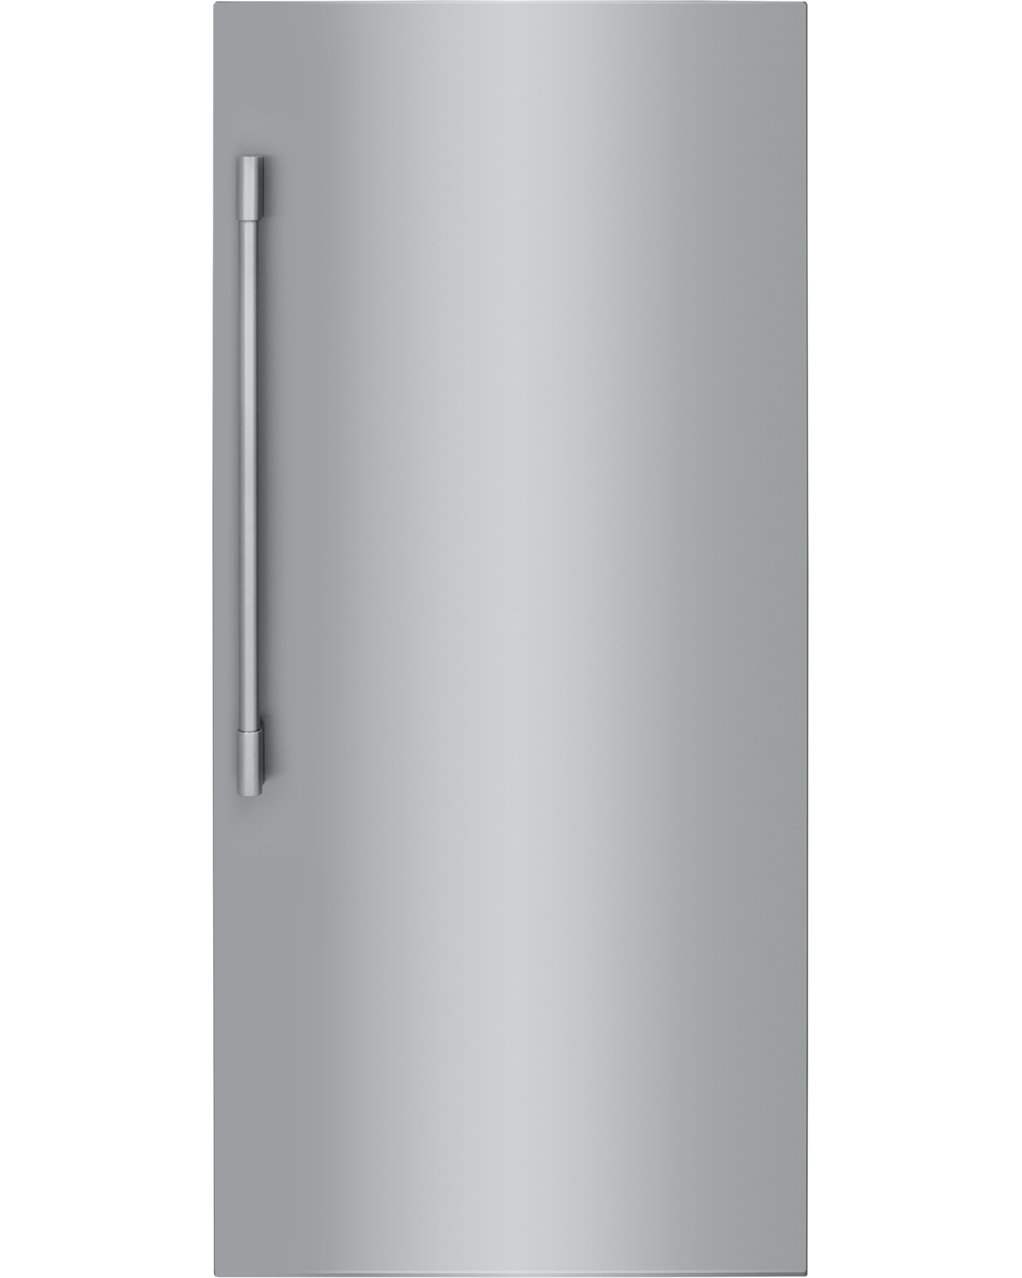 FRIGIDAIRE FPRU19F8WF Professional 19 Cu. Ft. Single-Door Refrigerator (Twins)